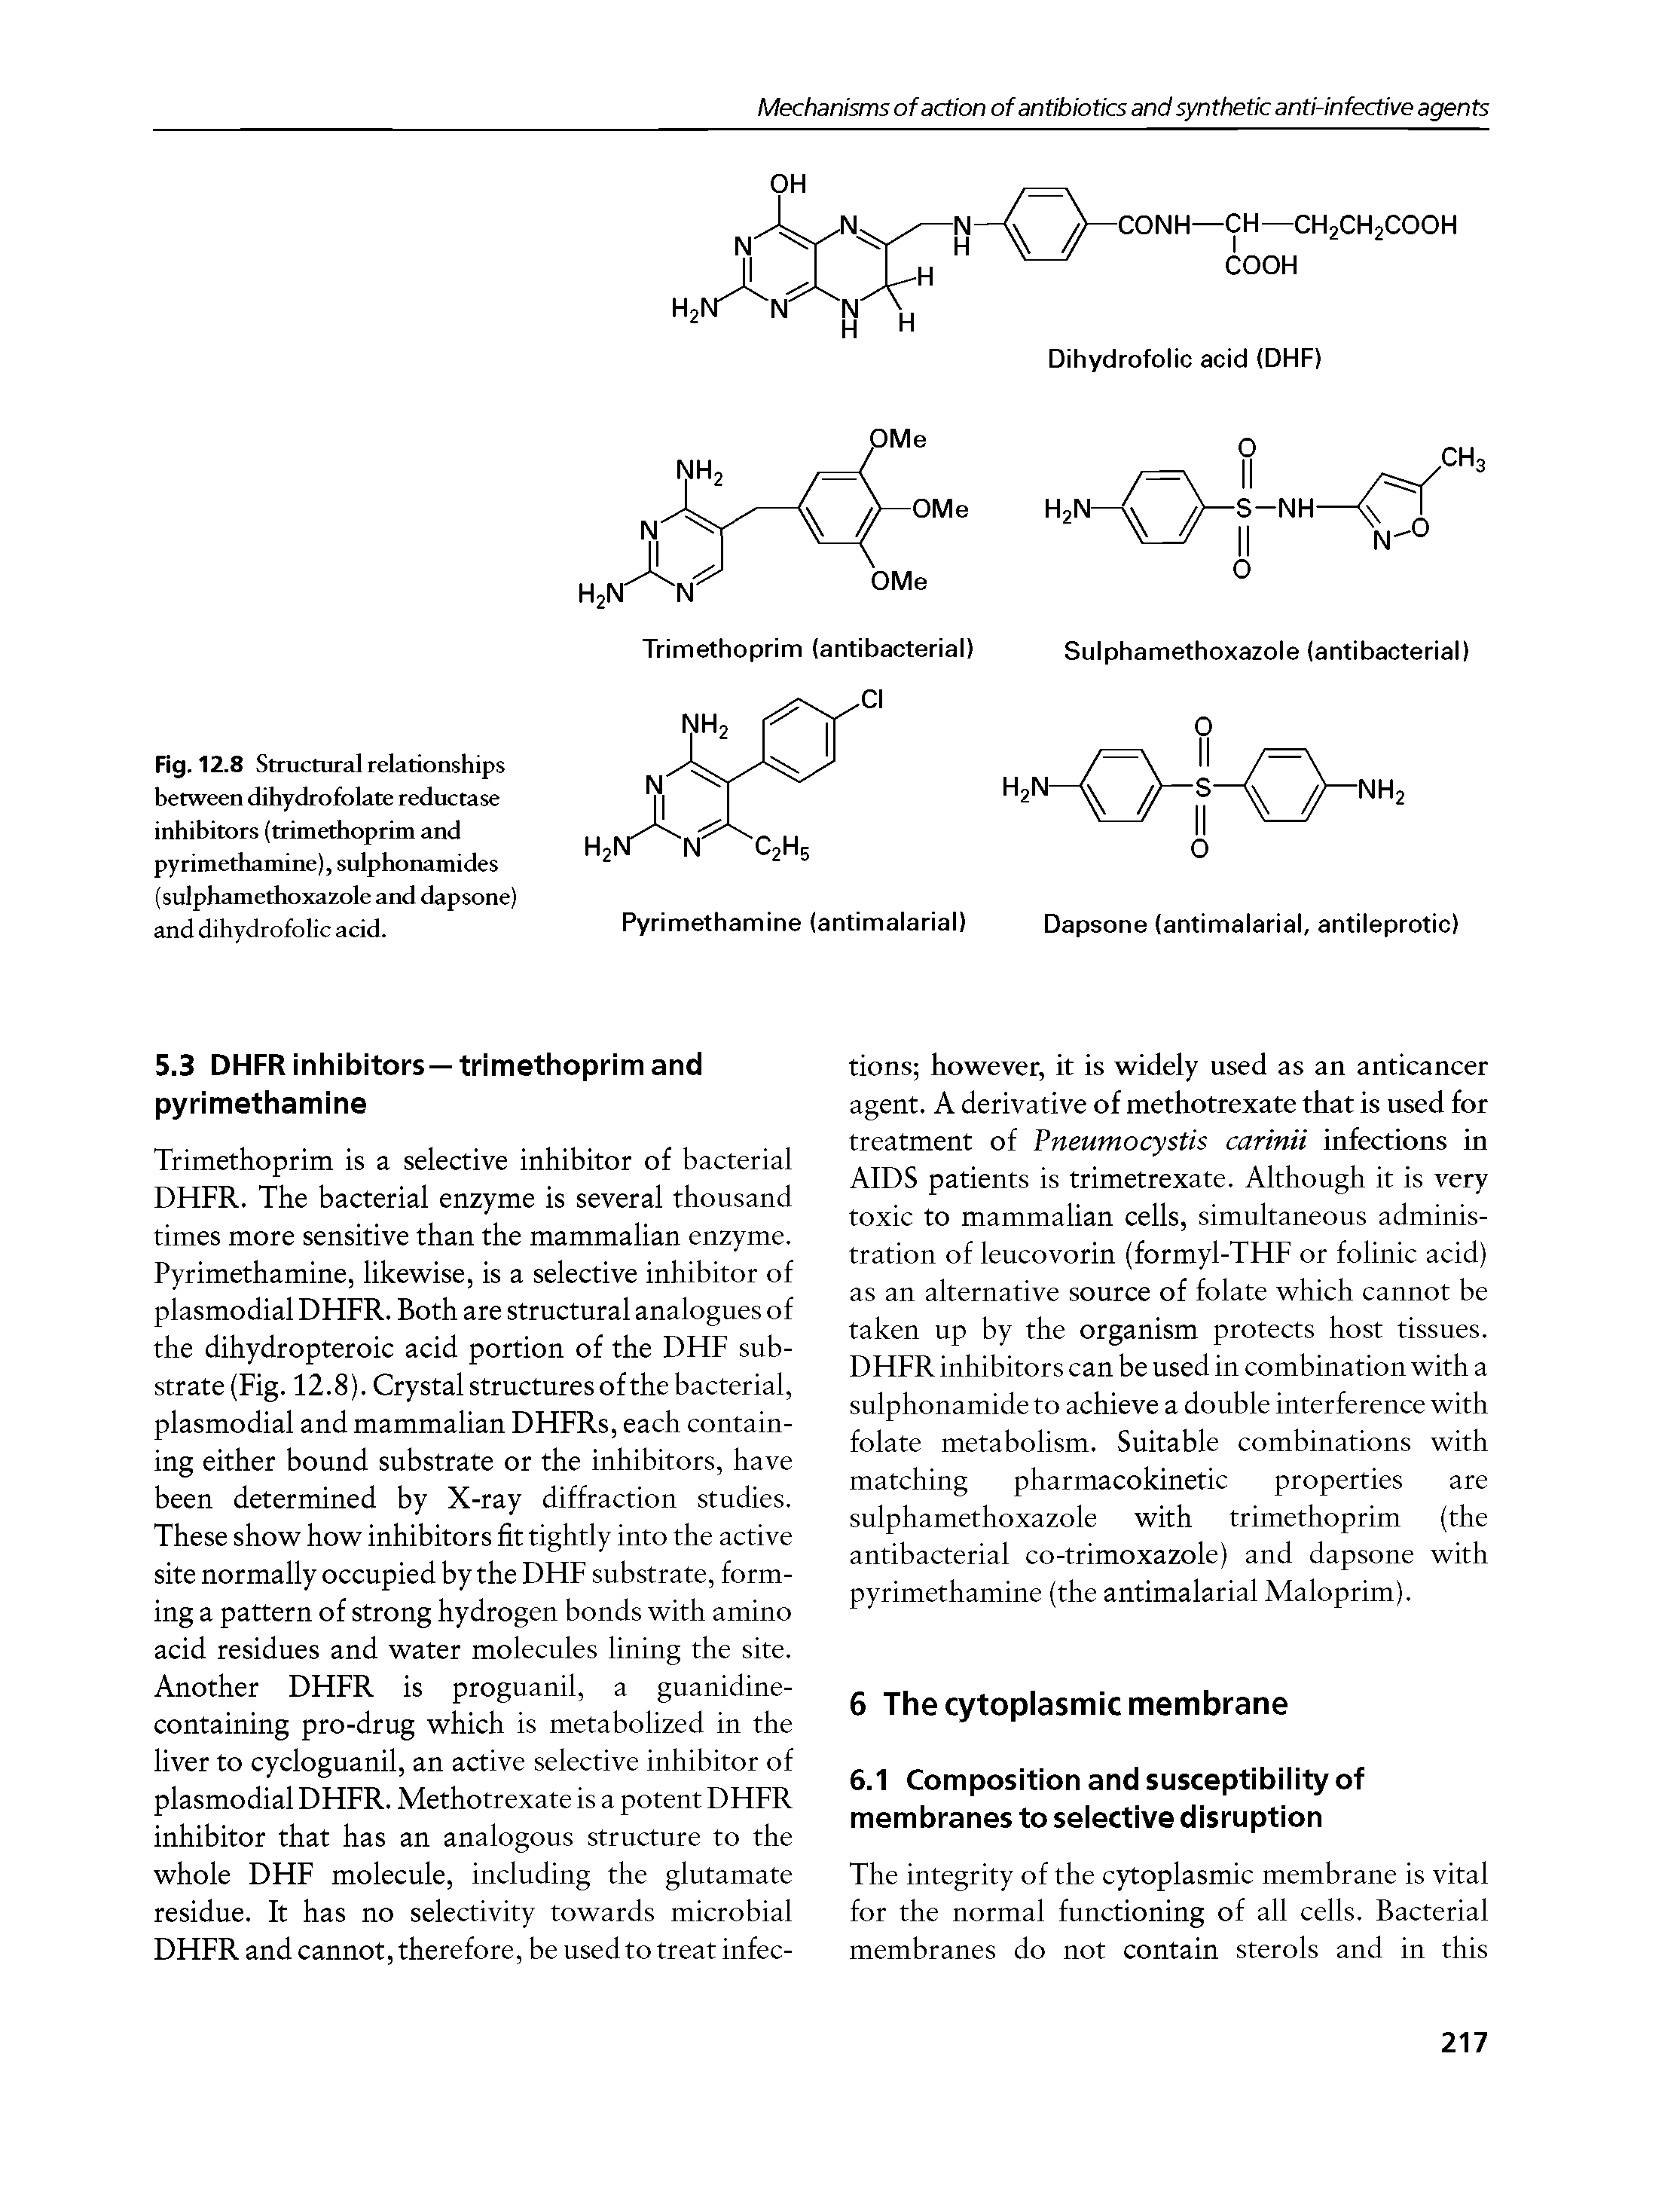 Fig. 12.8 Structural relationships between dihydrofolate reductase inhibitors (trimethoprim and pyrimethamine), sulphonamides (sulphamethoxazole and dapsone) and dihydrofolic acid.